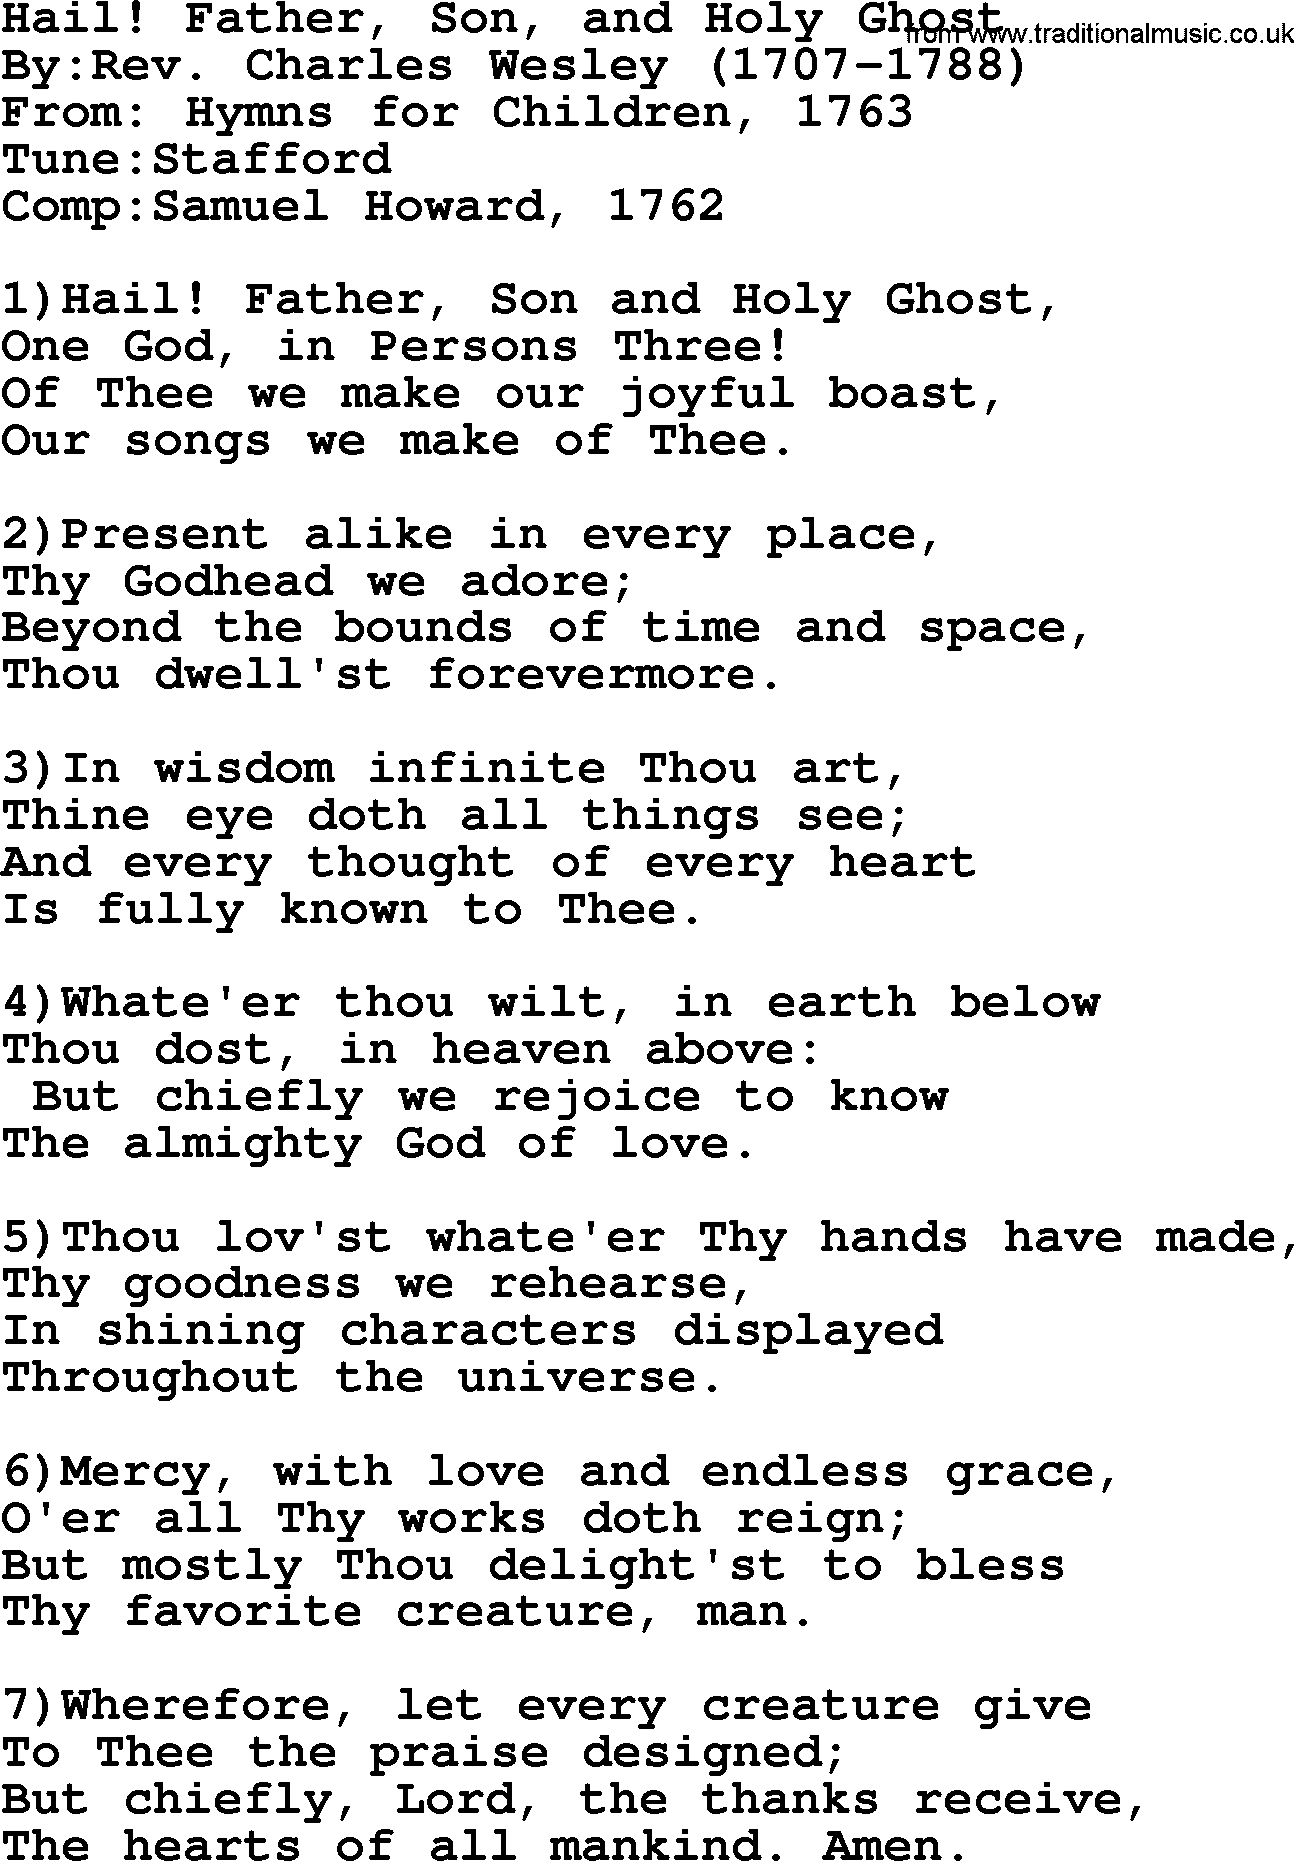 Methodist Hymn: Hail! Father, Son, And Holy Ghost, lyrics